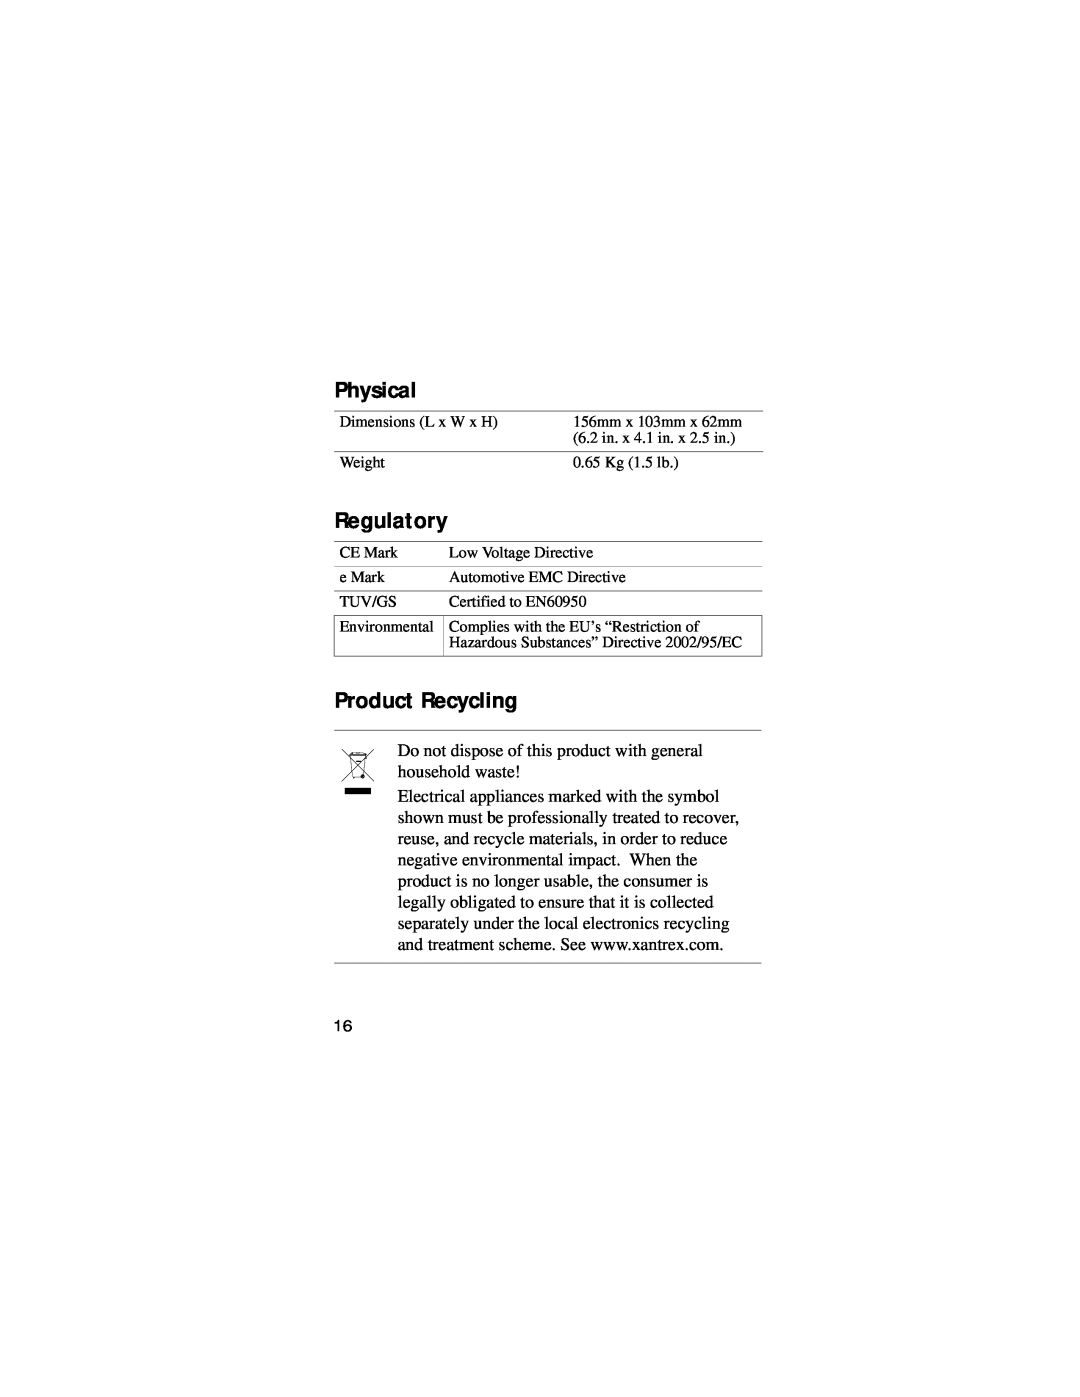 Xantrex Technology 150 manual Physical, Regulatory, Product Recycling 